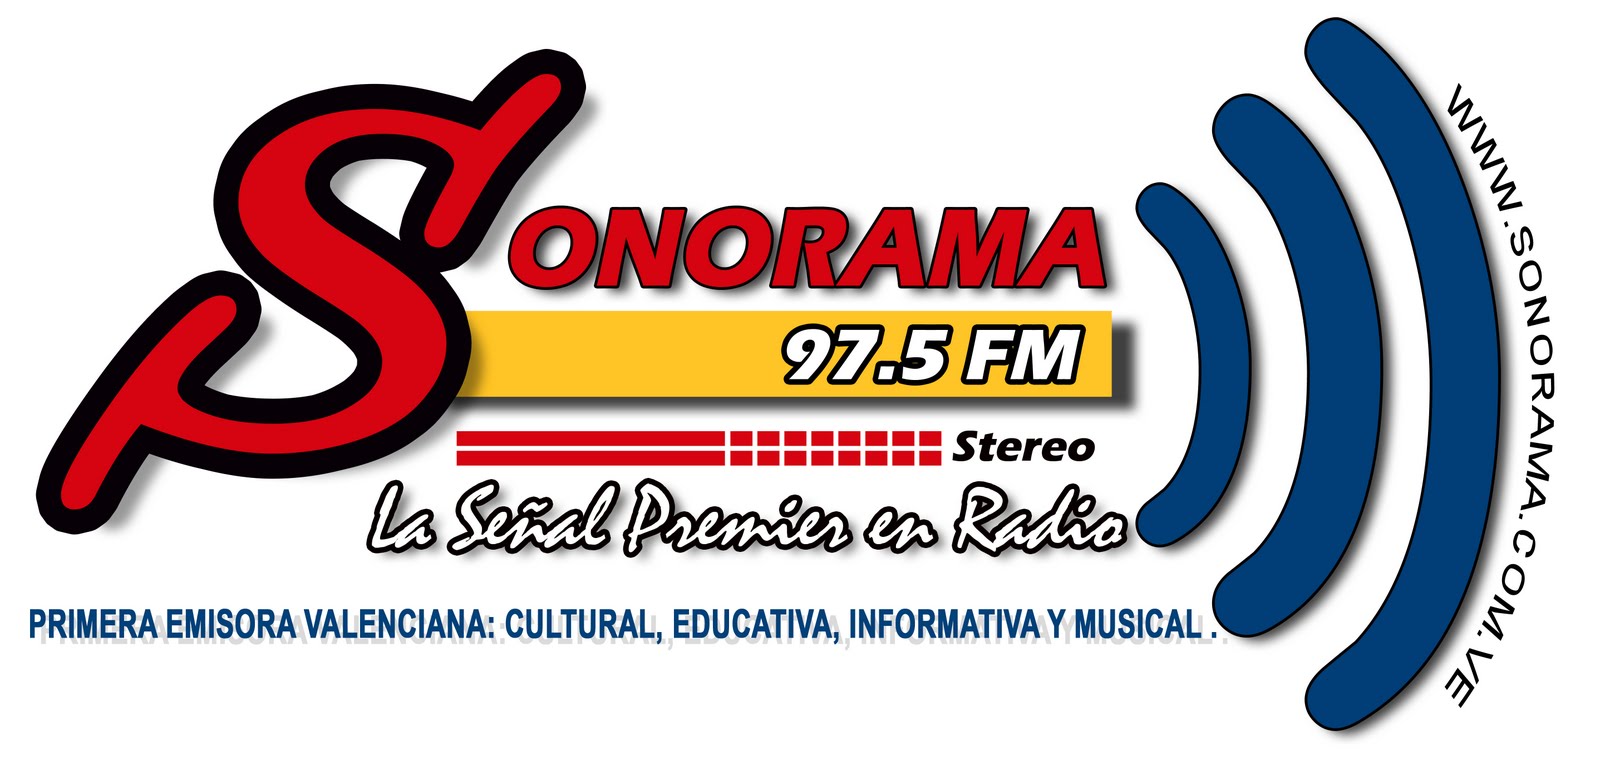 Sonorama Stereo 97.5 FM